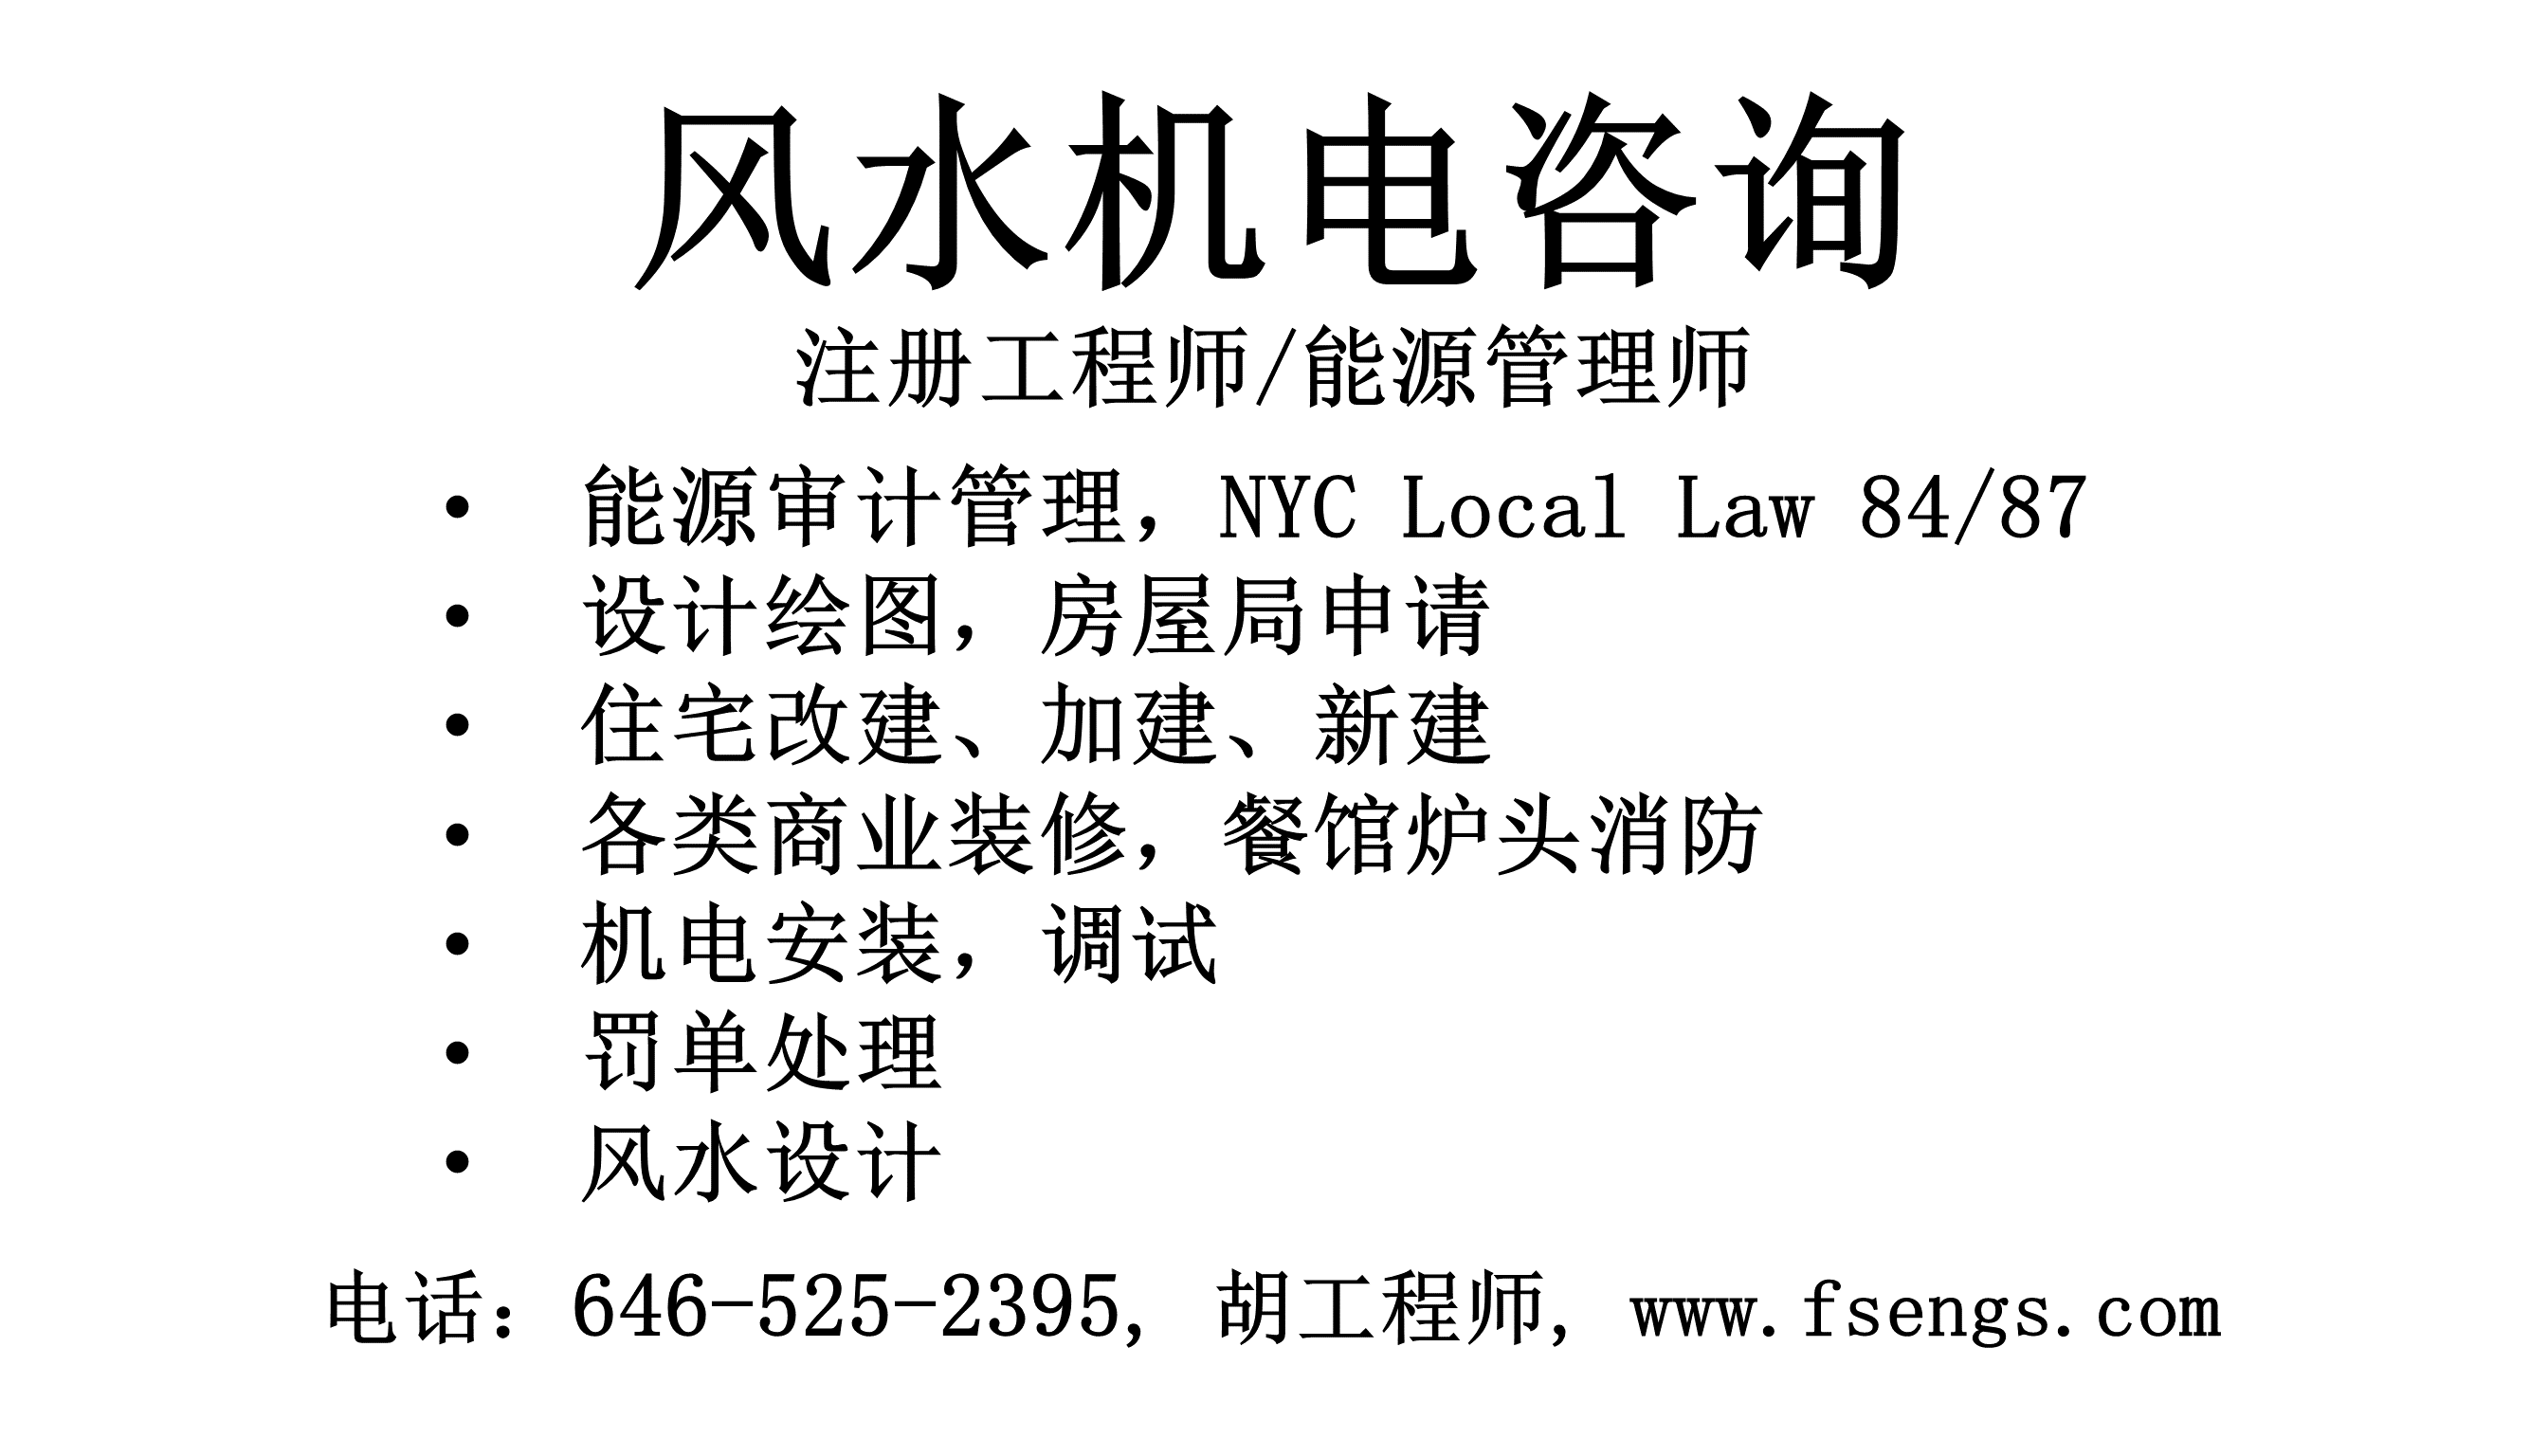 风水机电咨询，Local Law 84/87